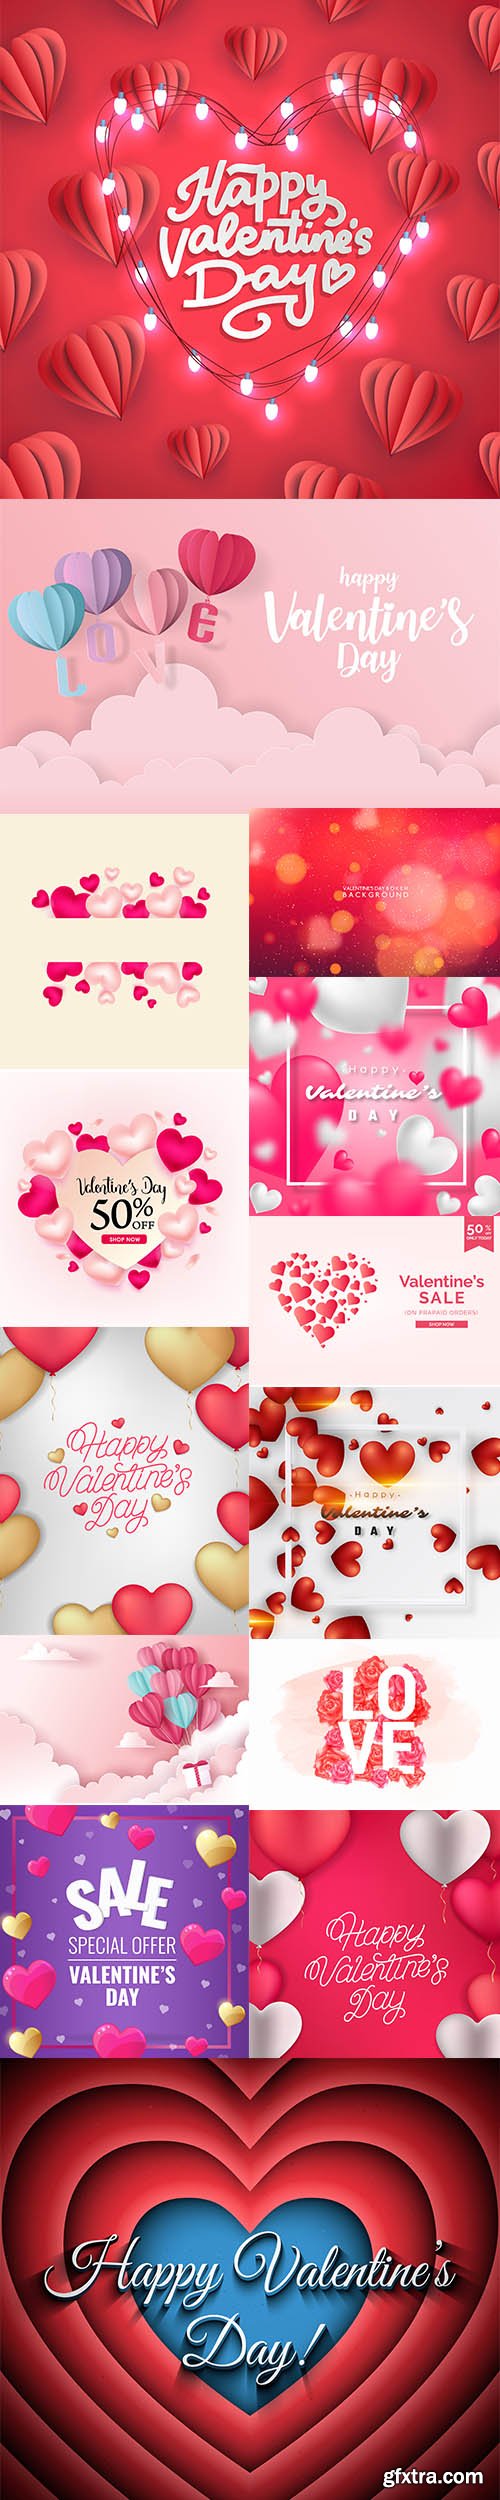 Vector Set of Romantic Valentines Day Illustrations Vol 2